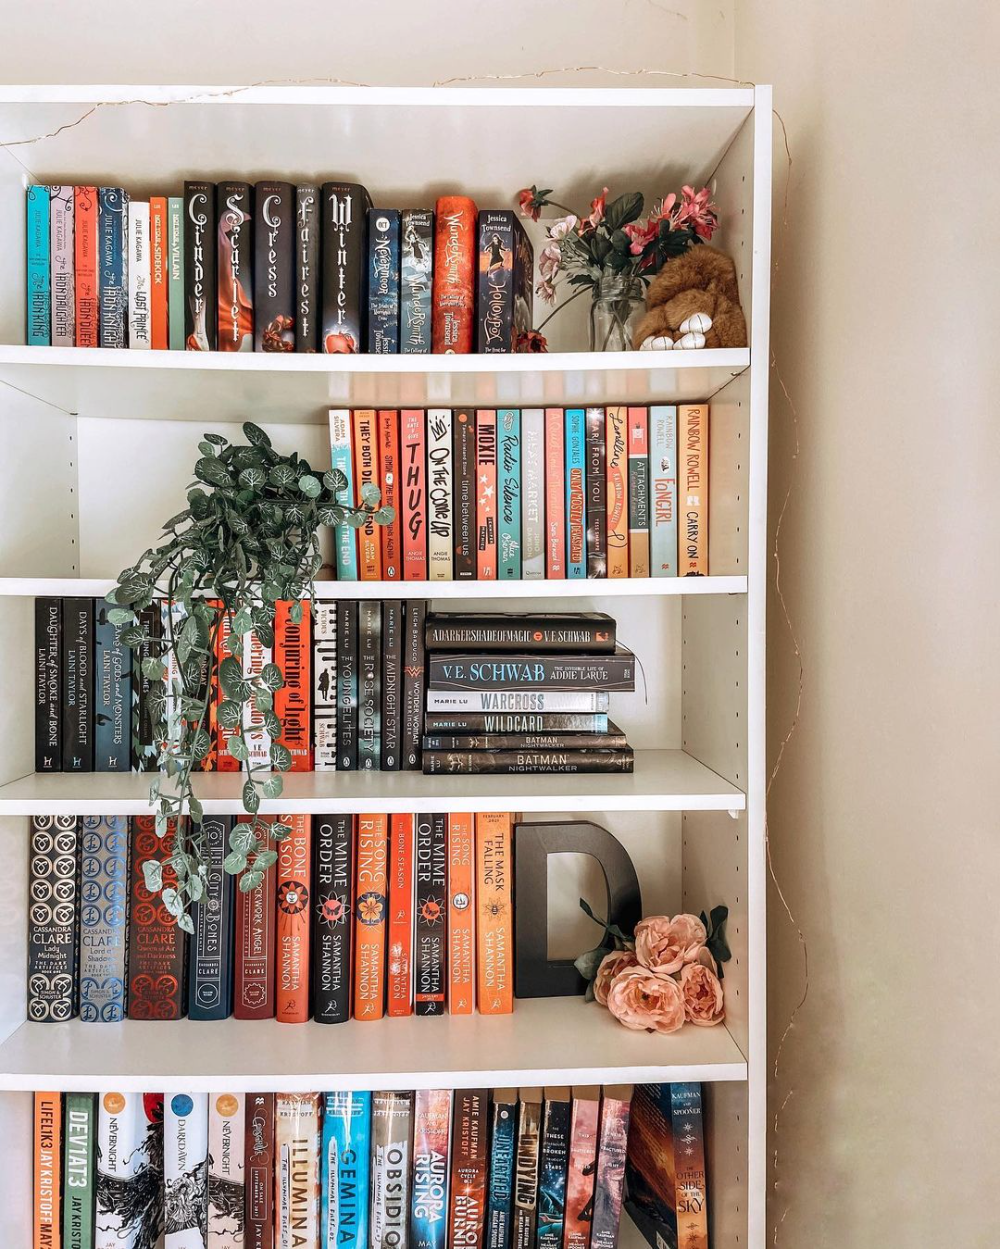 Top 10 Best Bookshelf Organization Ideas Every Reader Needs to Try!